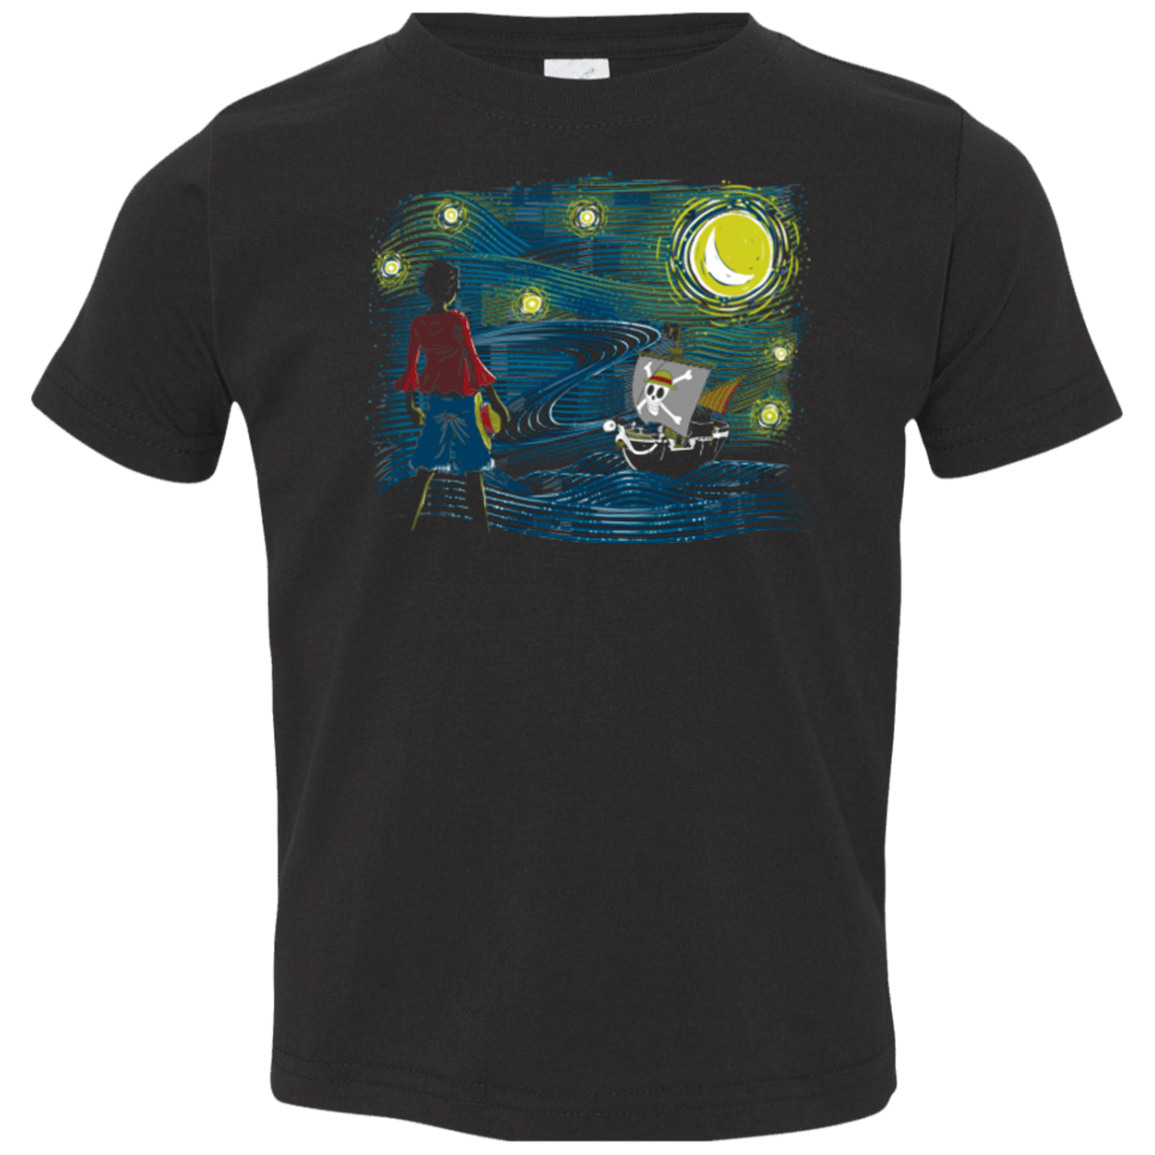 T-Shirts Black / 2T Starry Sea Toddler Premium T-Shirt